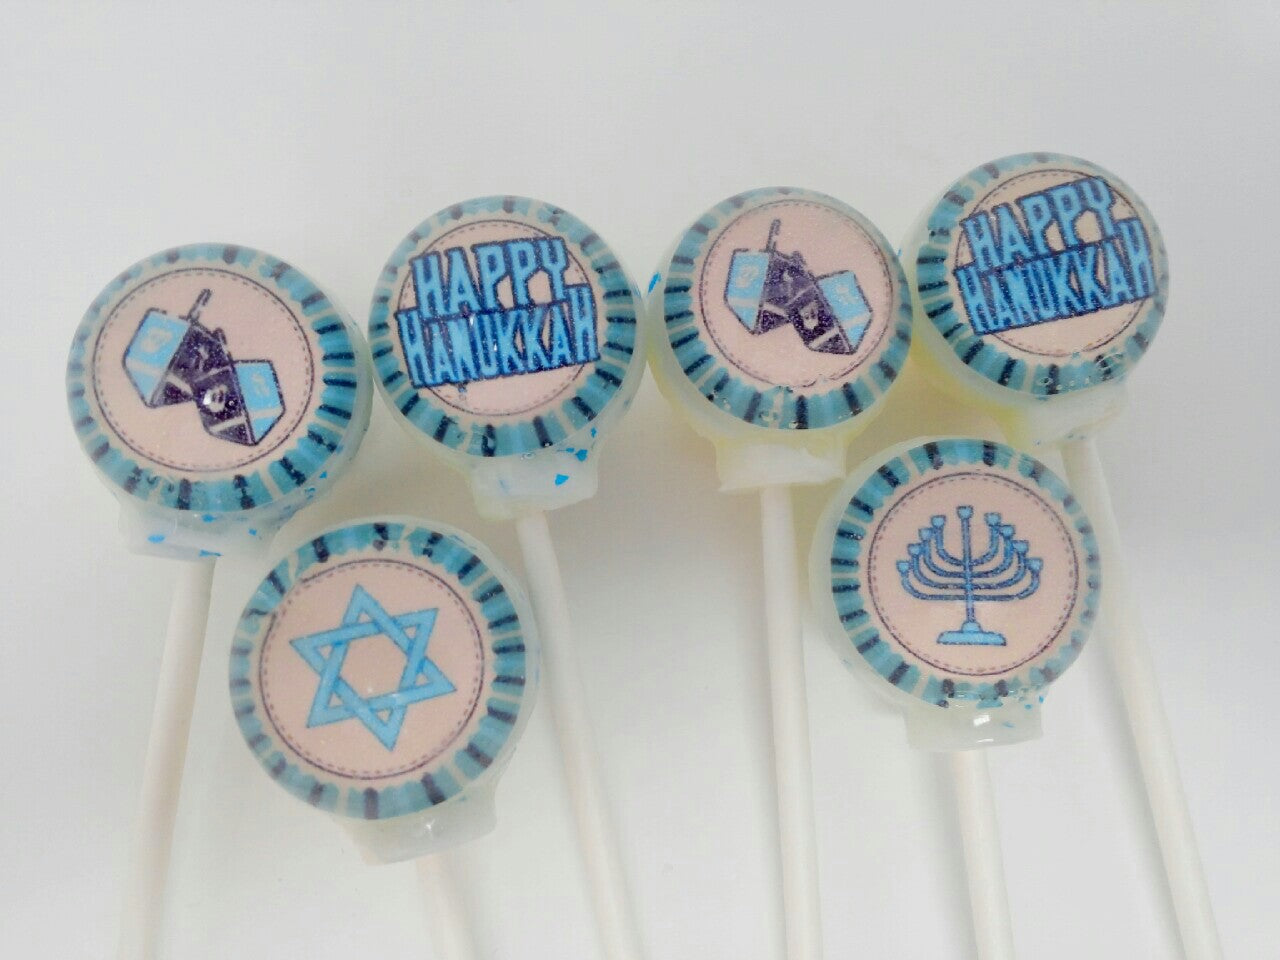 Happy Hanukkah 6-piece set by I Want Candy!